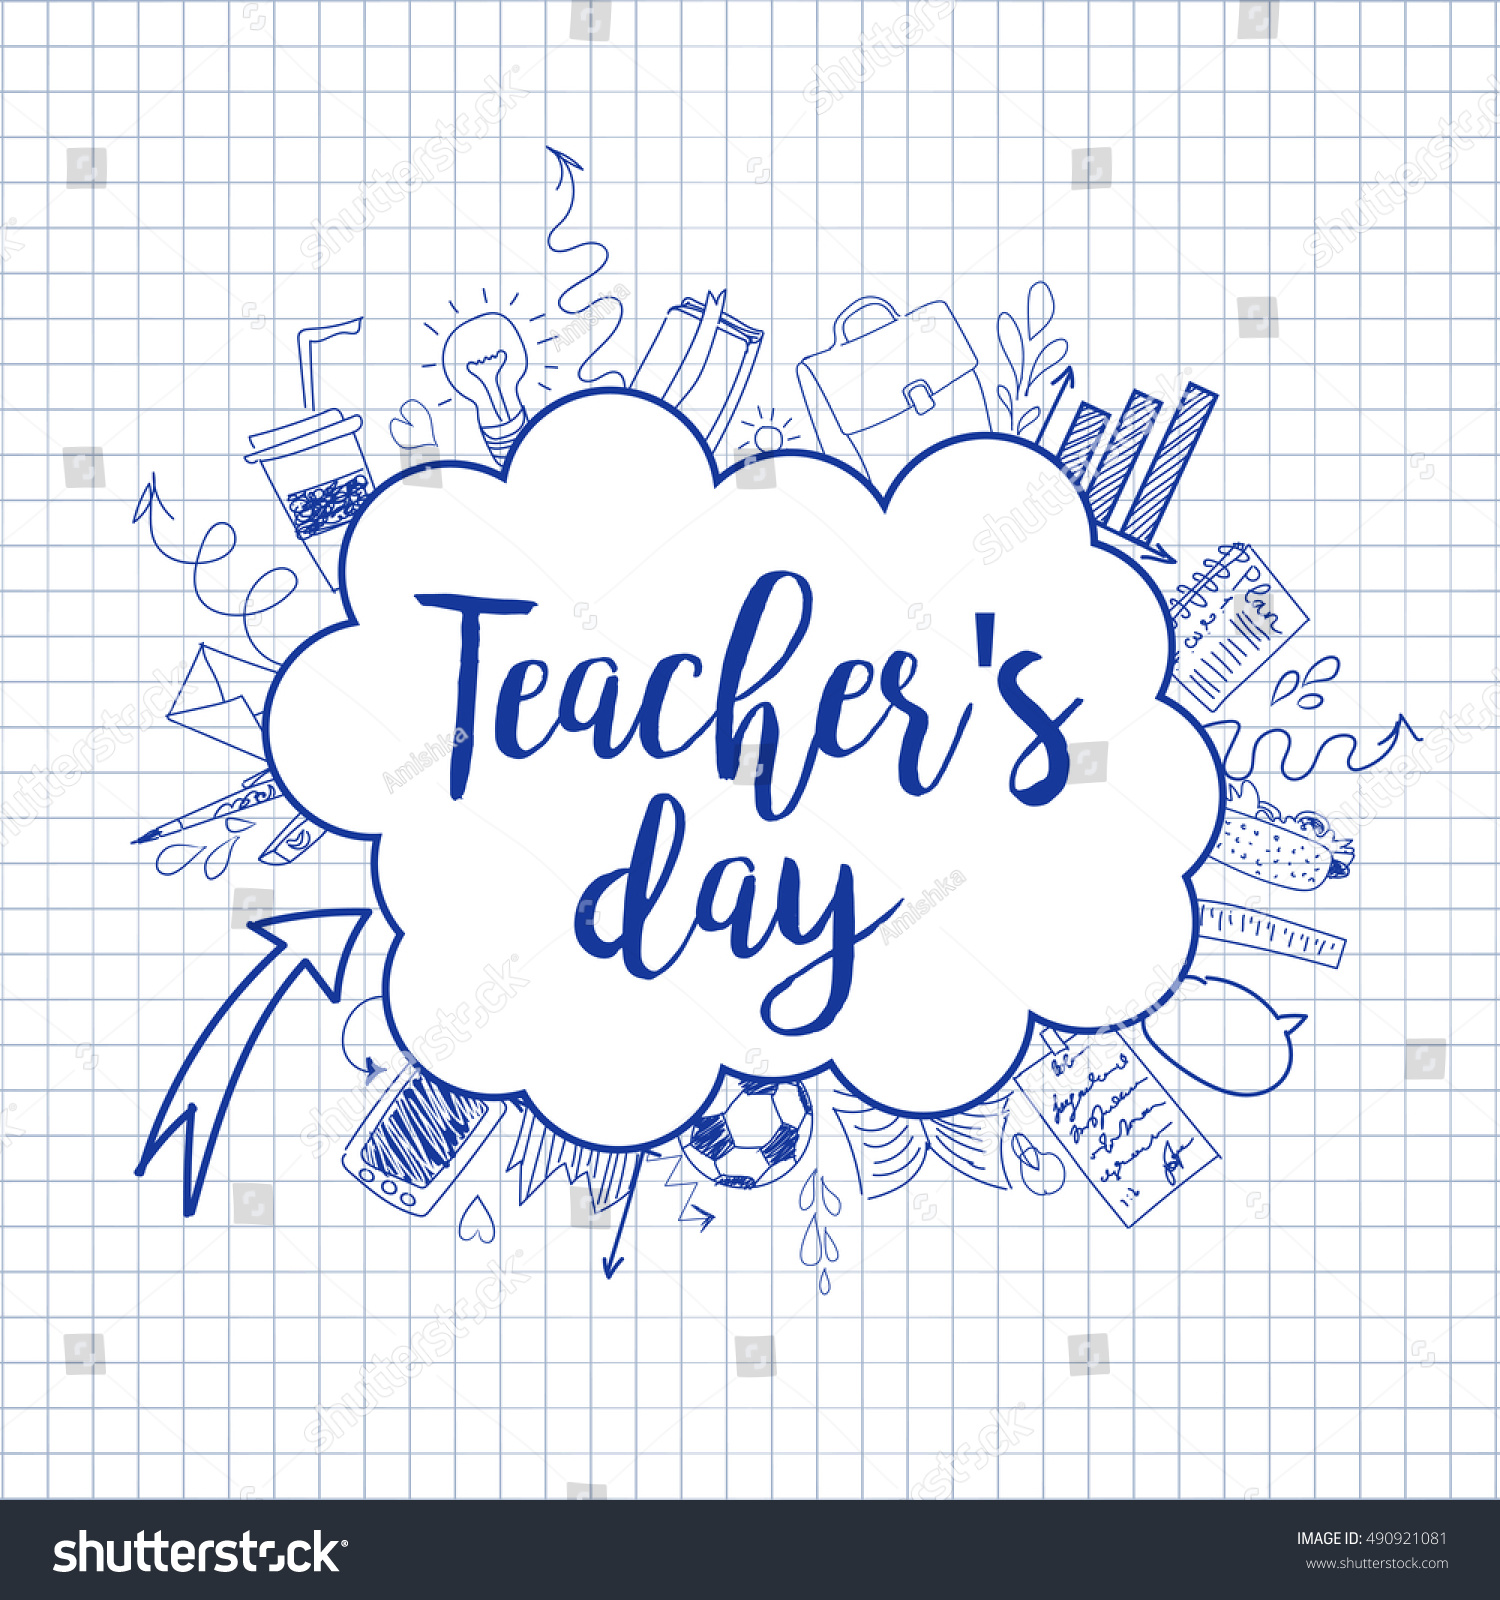 Happy Teachers Day Unique Handdrawn Typography Stock Vector 490921081 ...